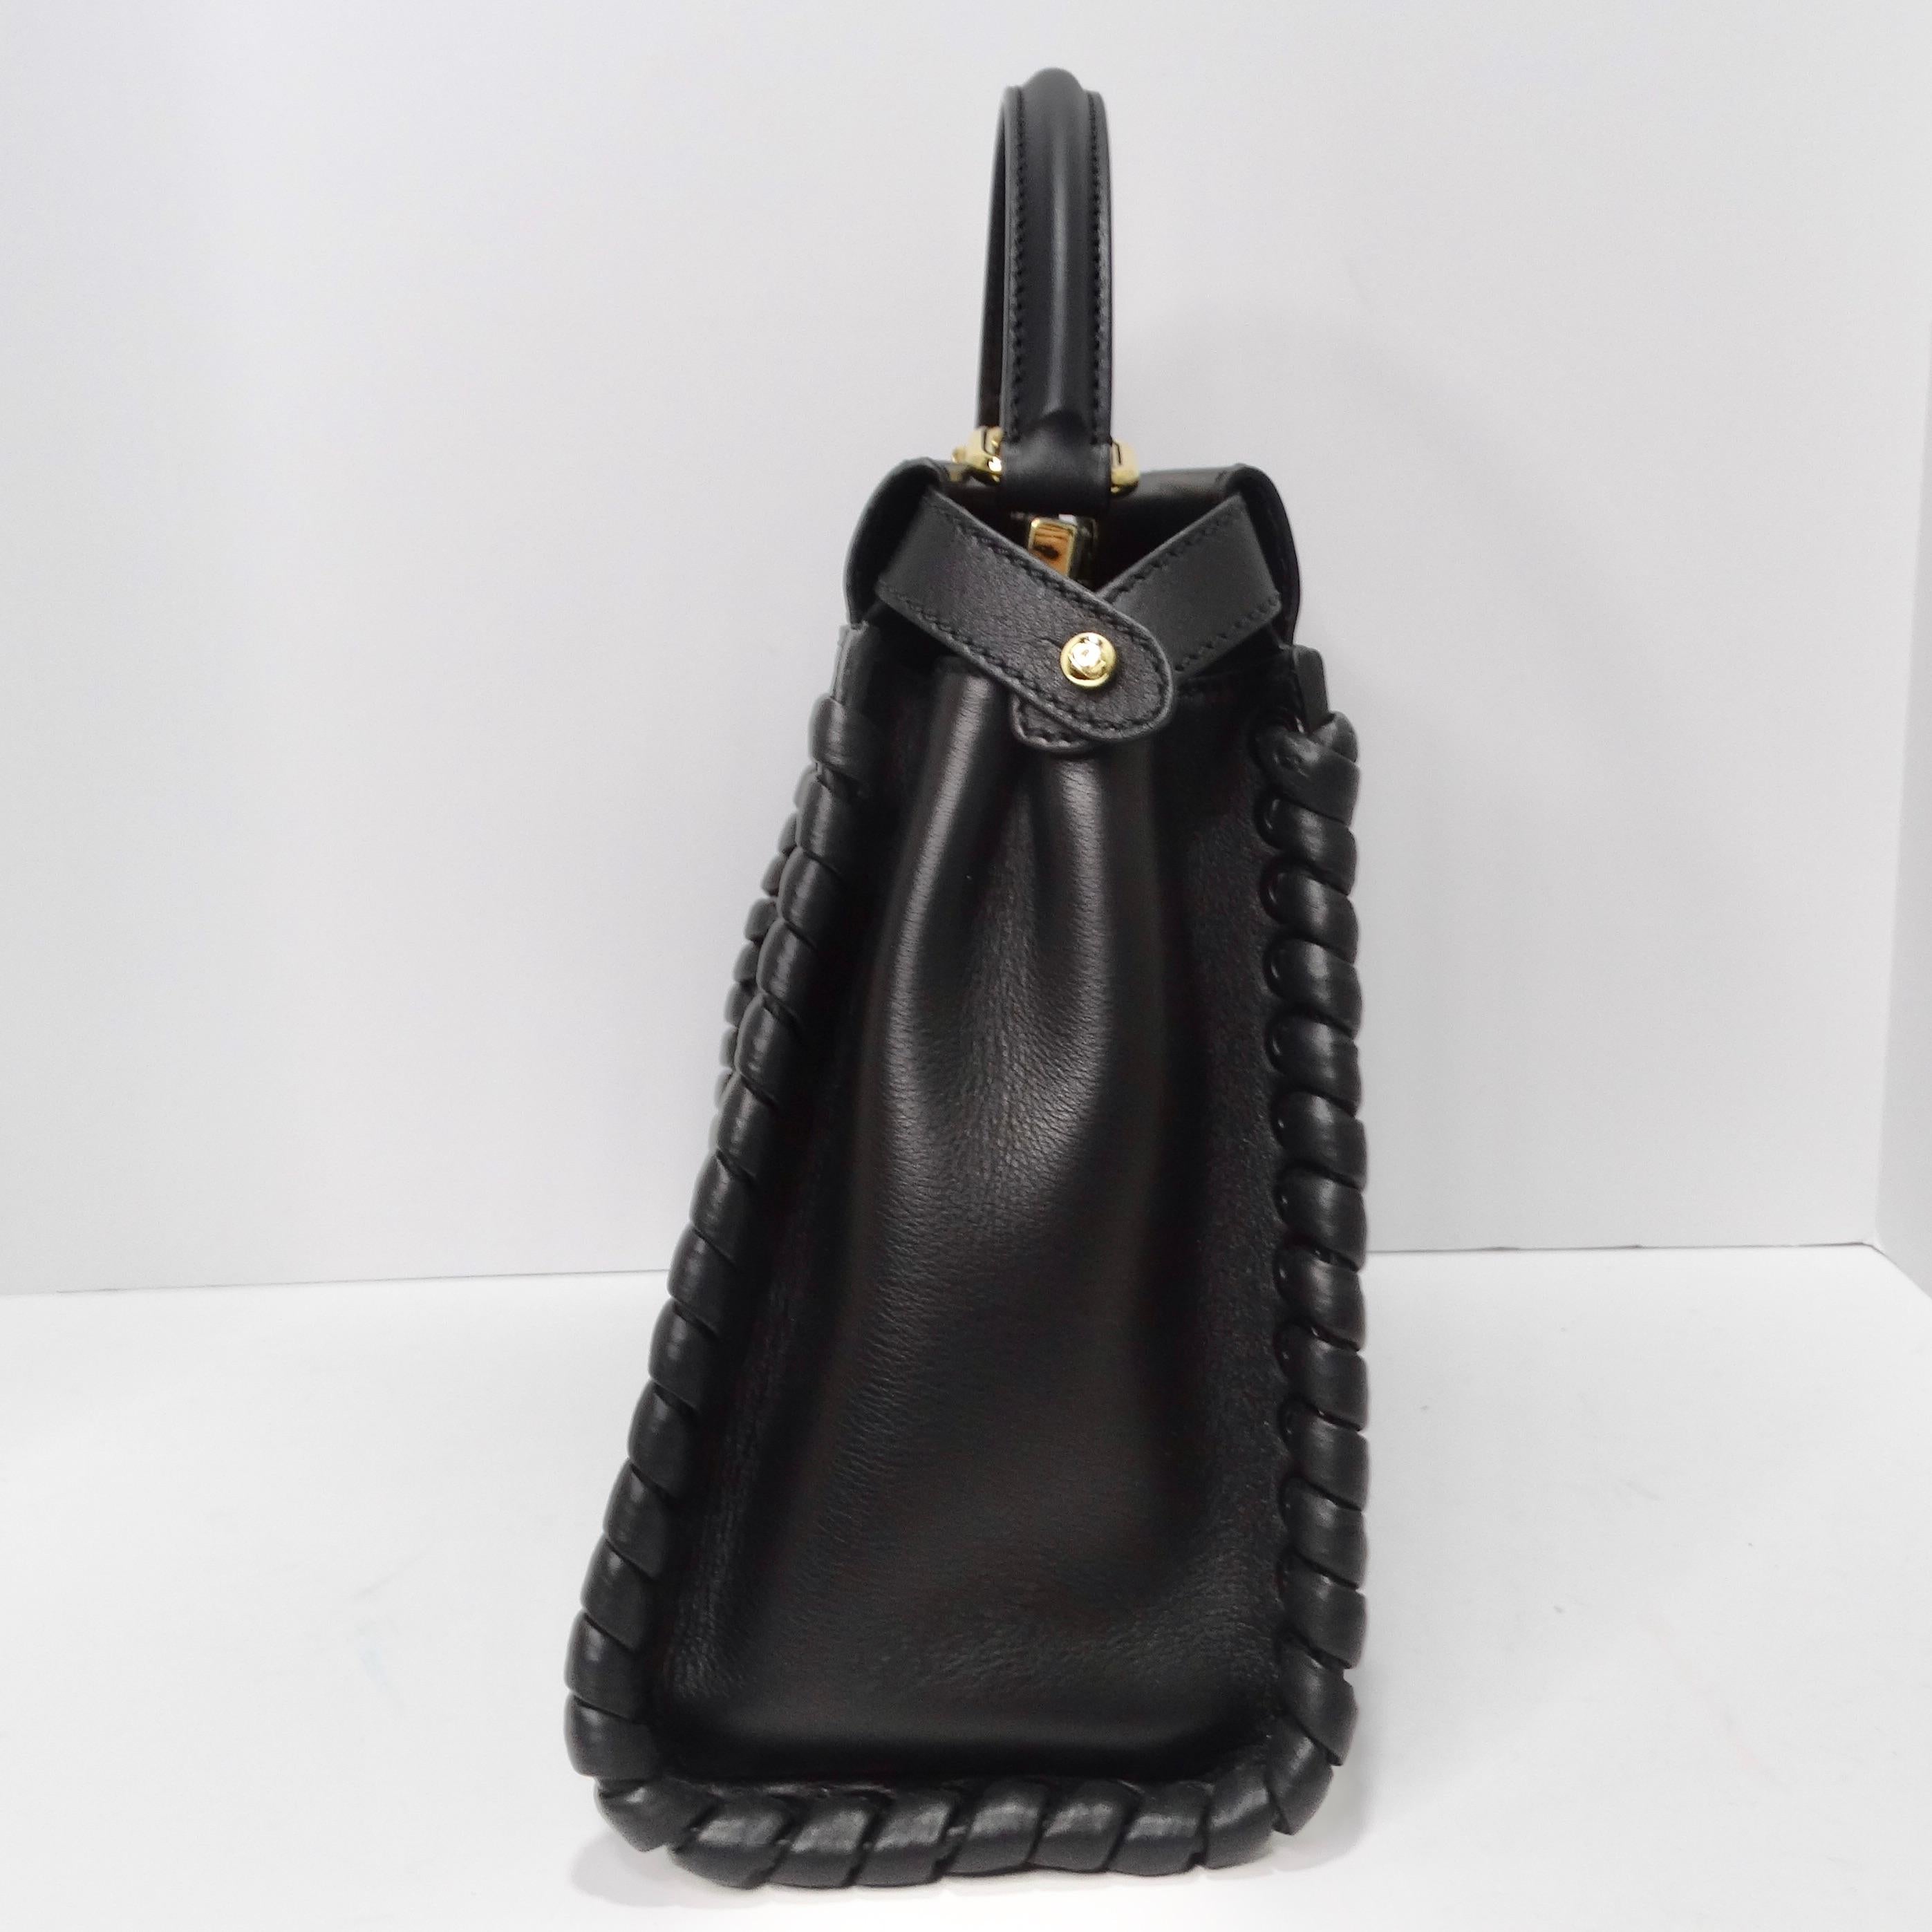 Fendi Peekaboo Medium Whipstitch Shoulder Bag In Excellent Condition For Sale In Scottsdale, AZ